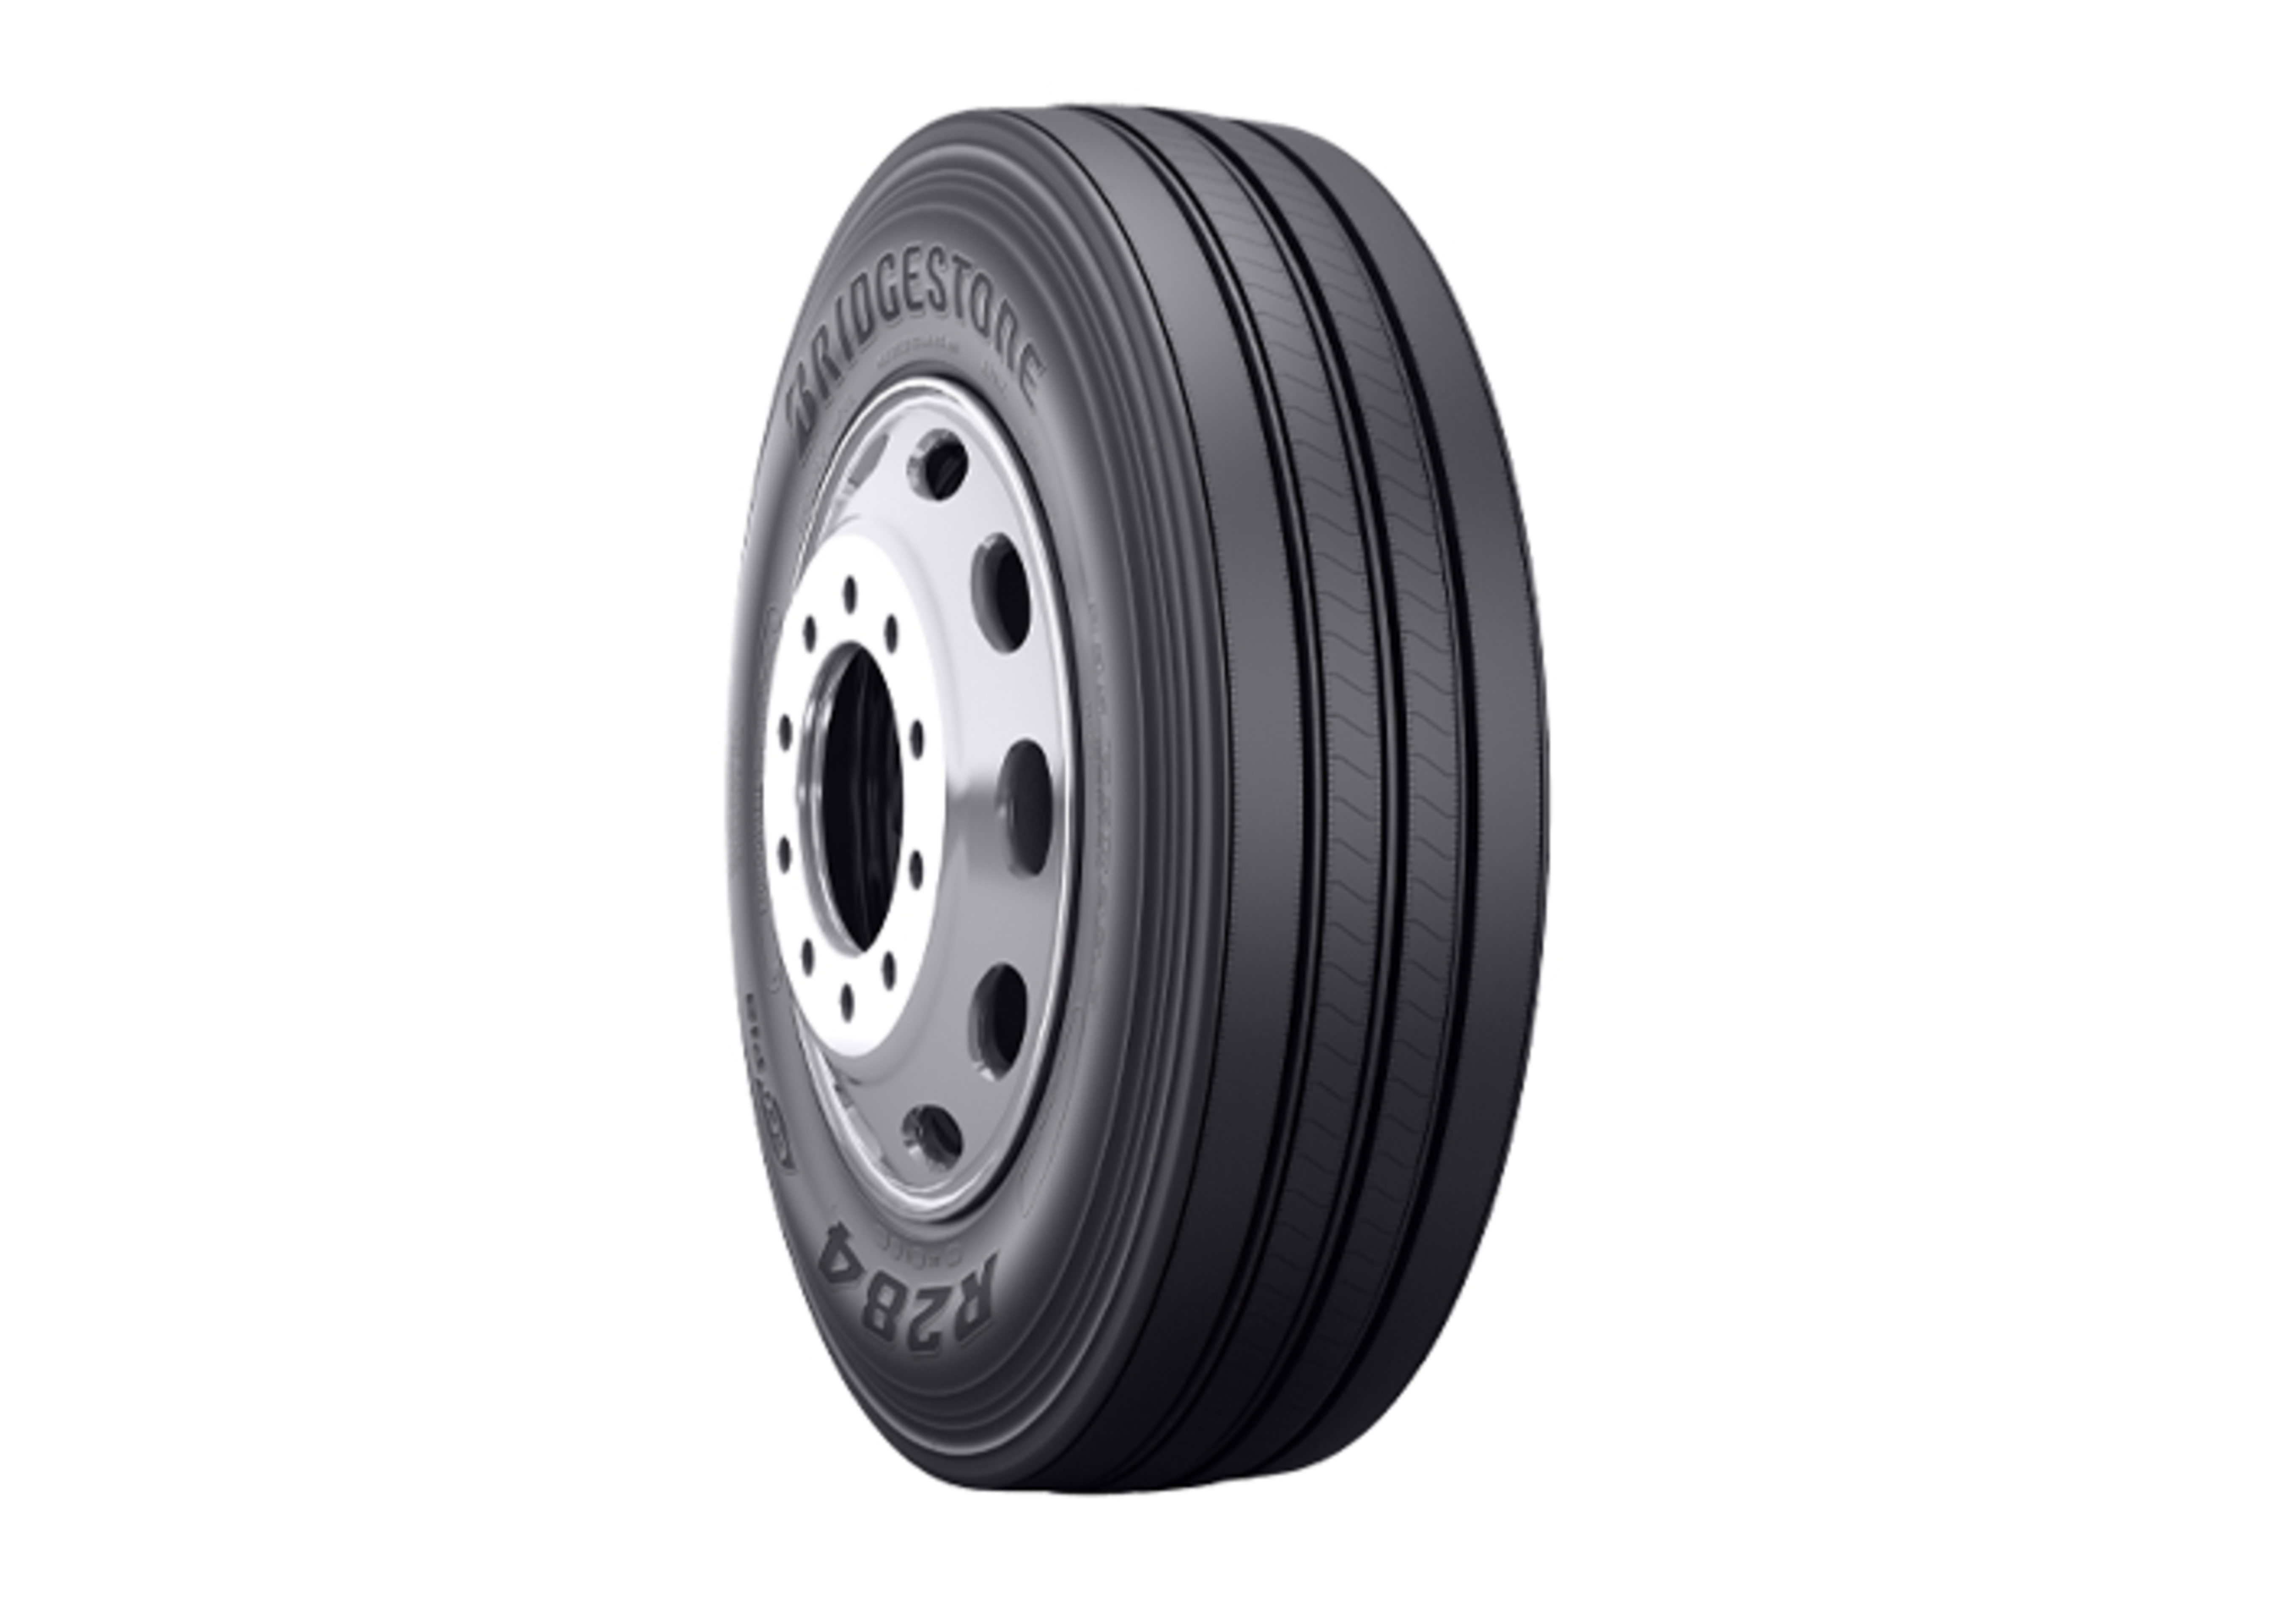 Buy Bridgestone R284 Ecopia Tires Online | SimpleTire